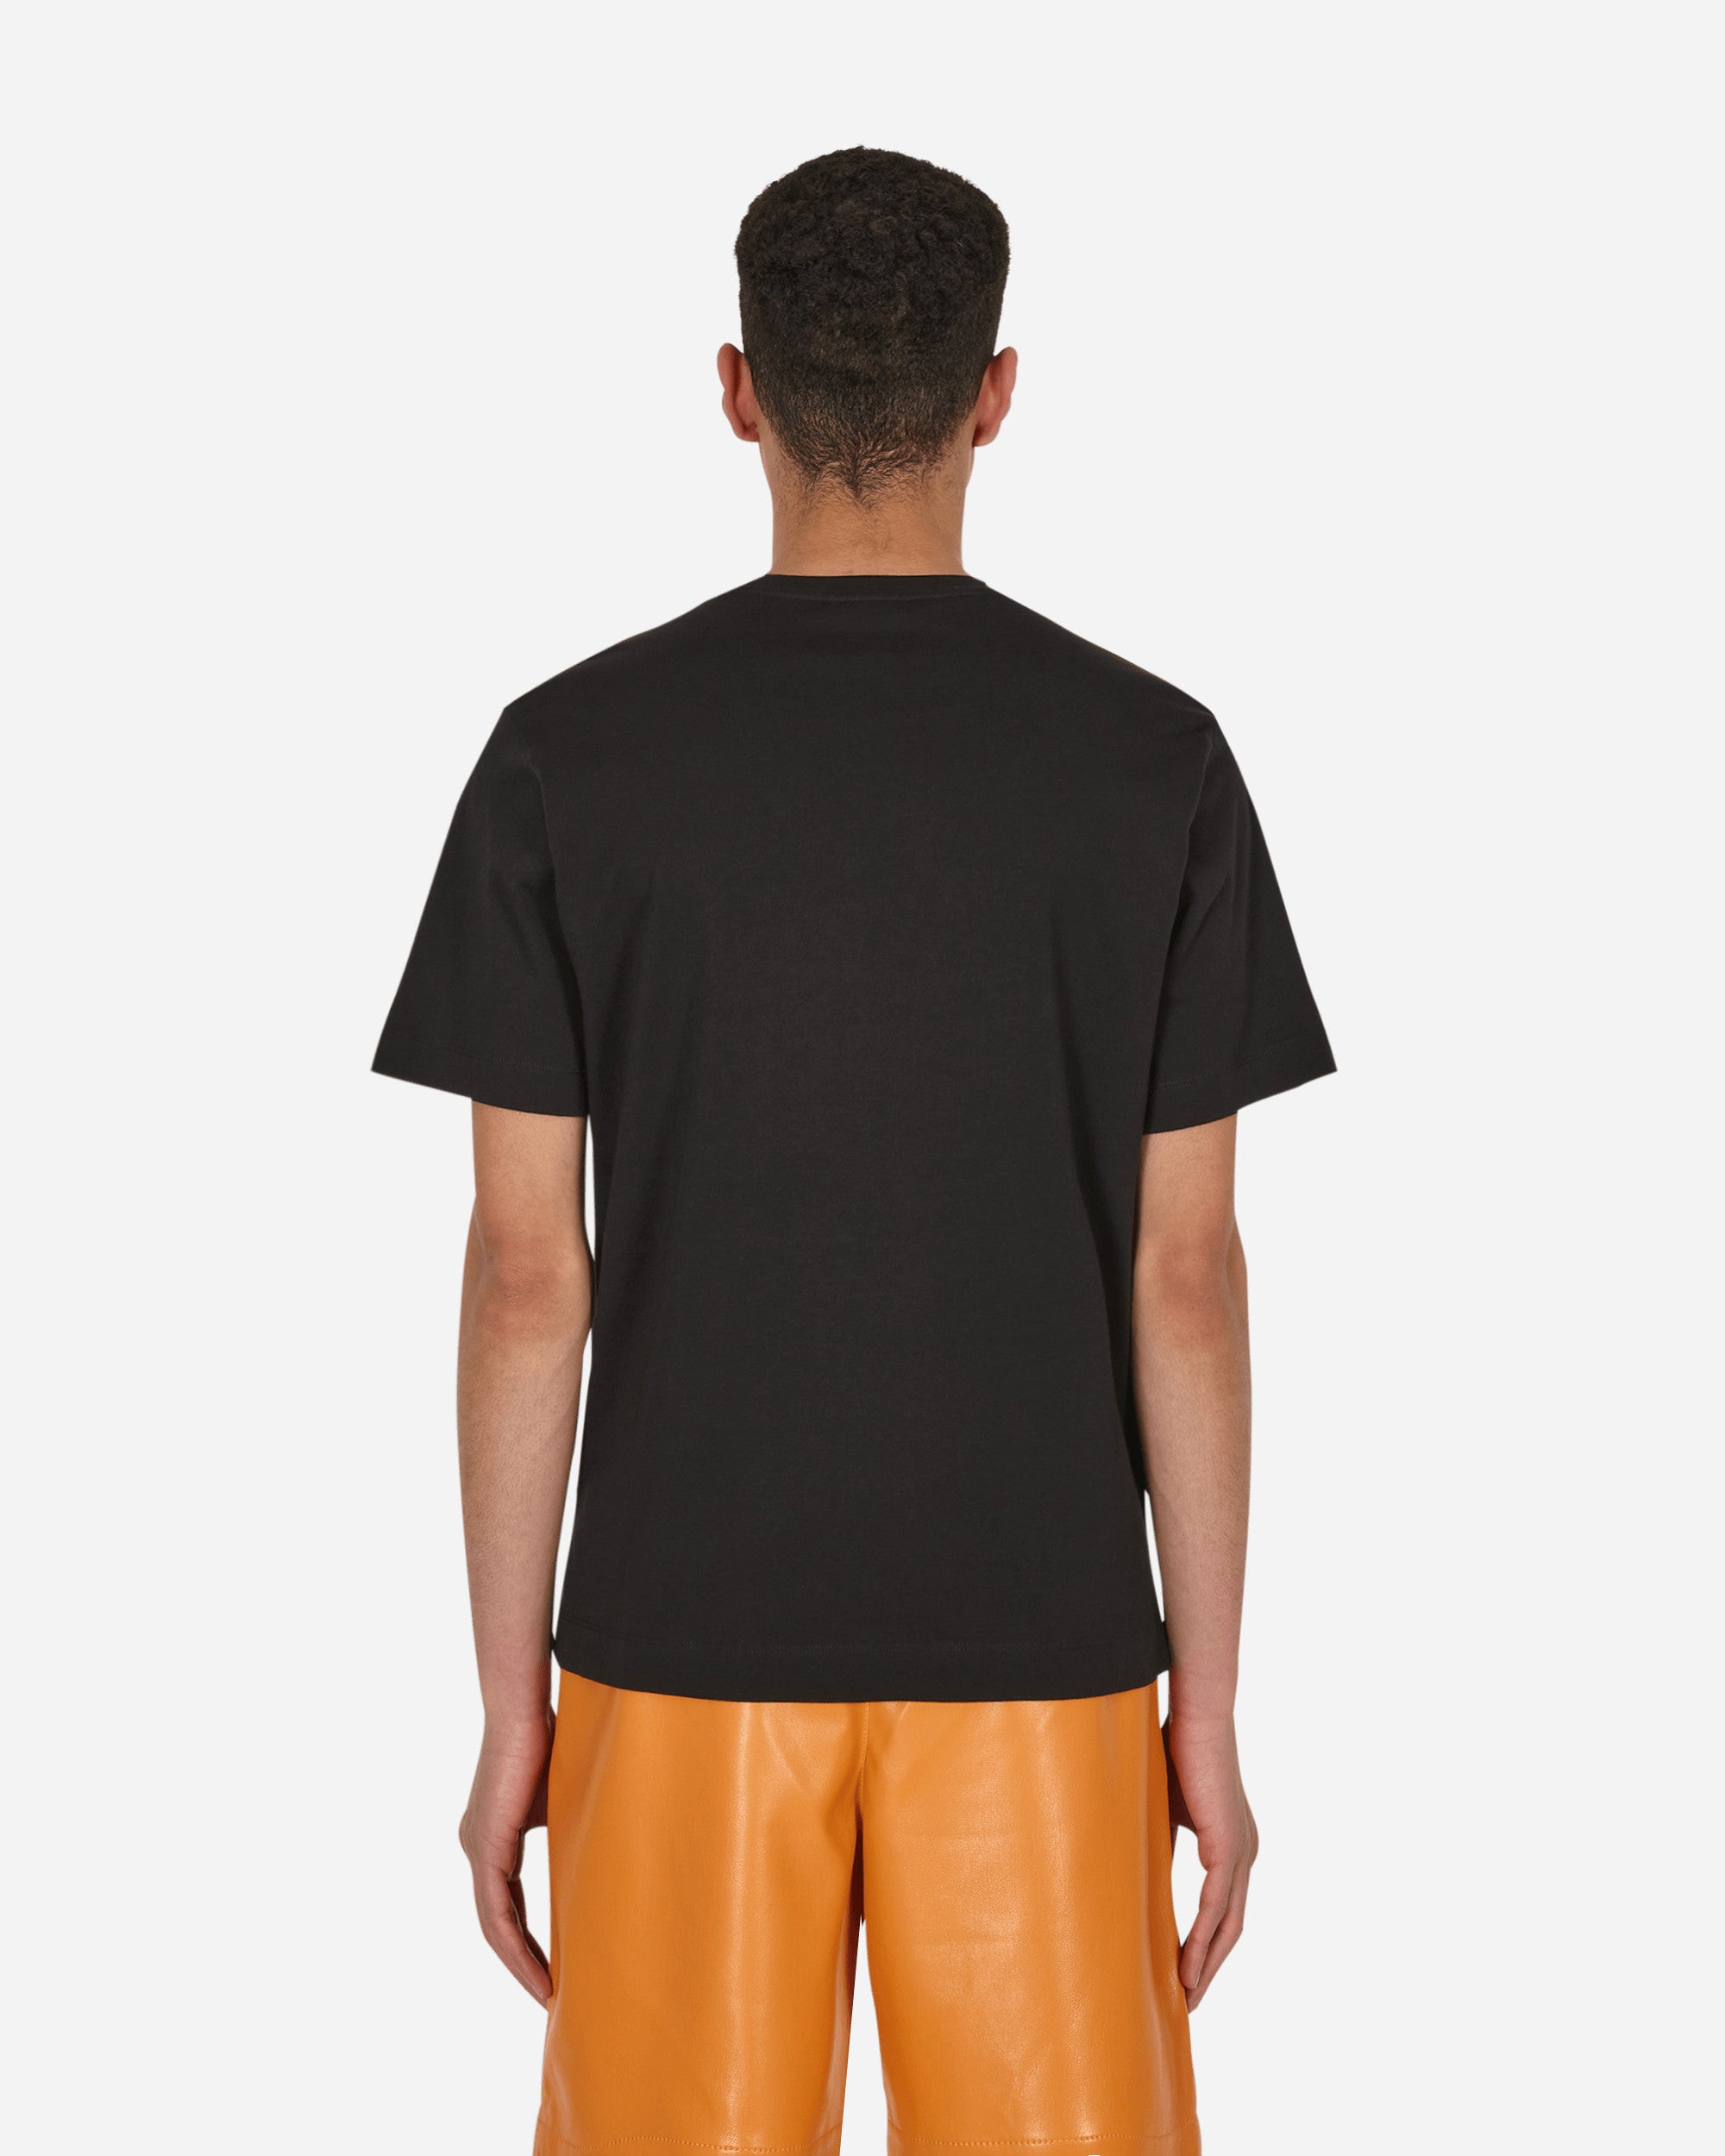 Dries Van Noten Hertz 4600 Black  T-Shirts Shortsleeve 021185-4600 900